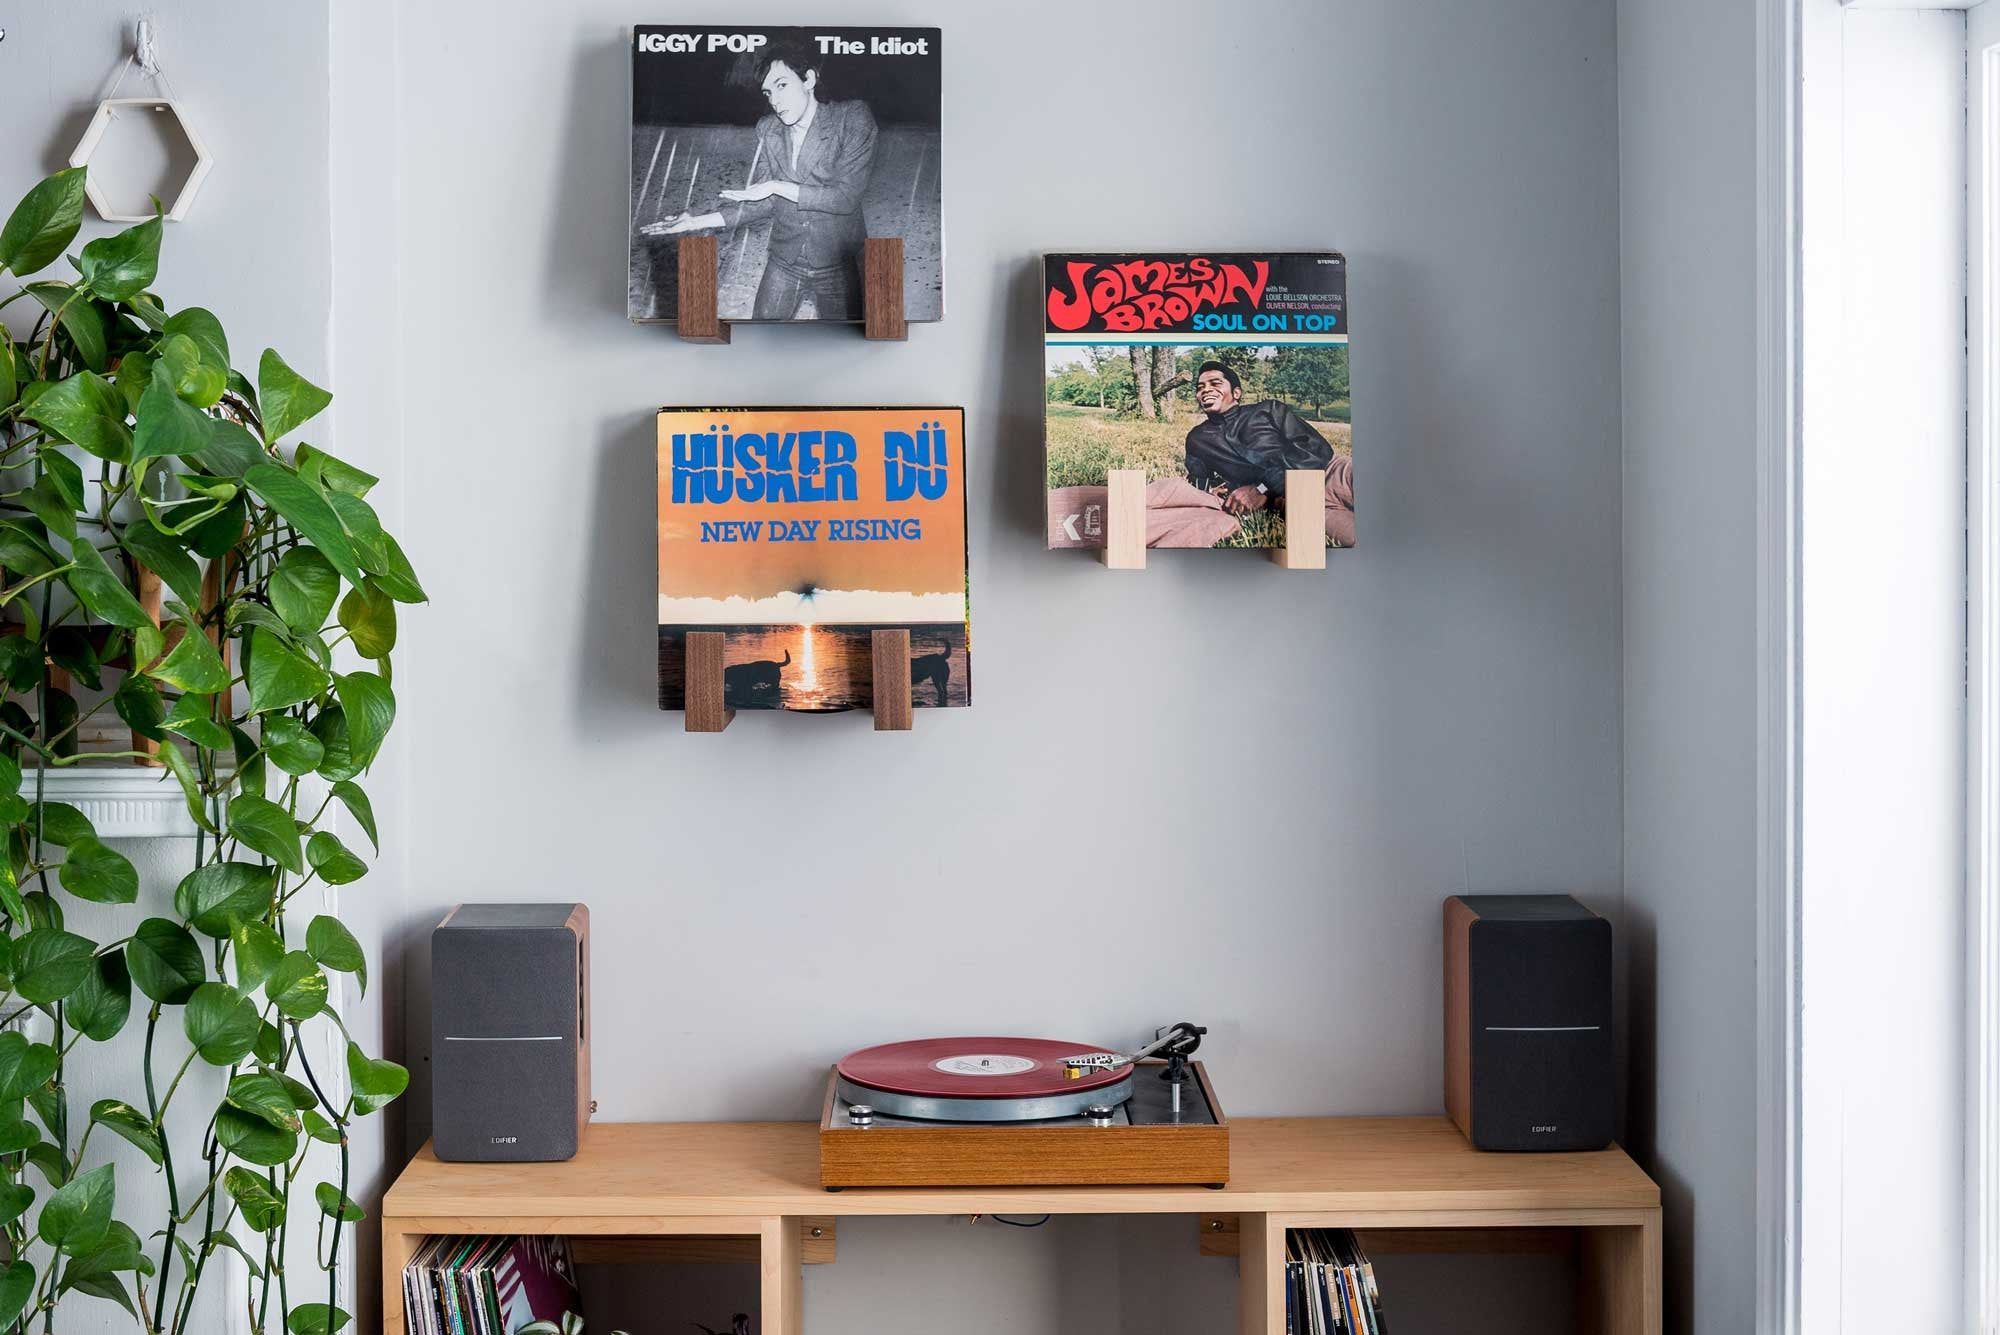 IEEK Vinyl Record Shelf Wall Mount,6 PCS Black Acrylic Album Record Holder Display Shelf,Display Your Daily Listening in Style 